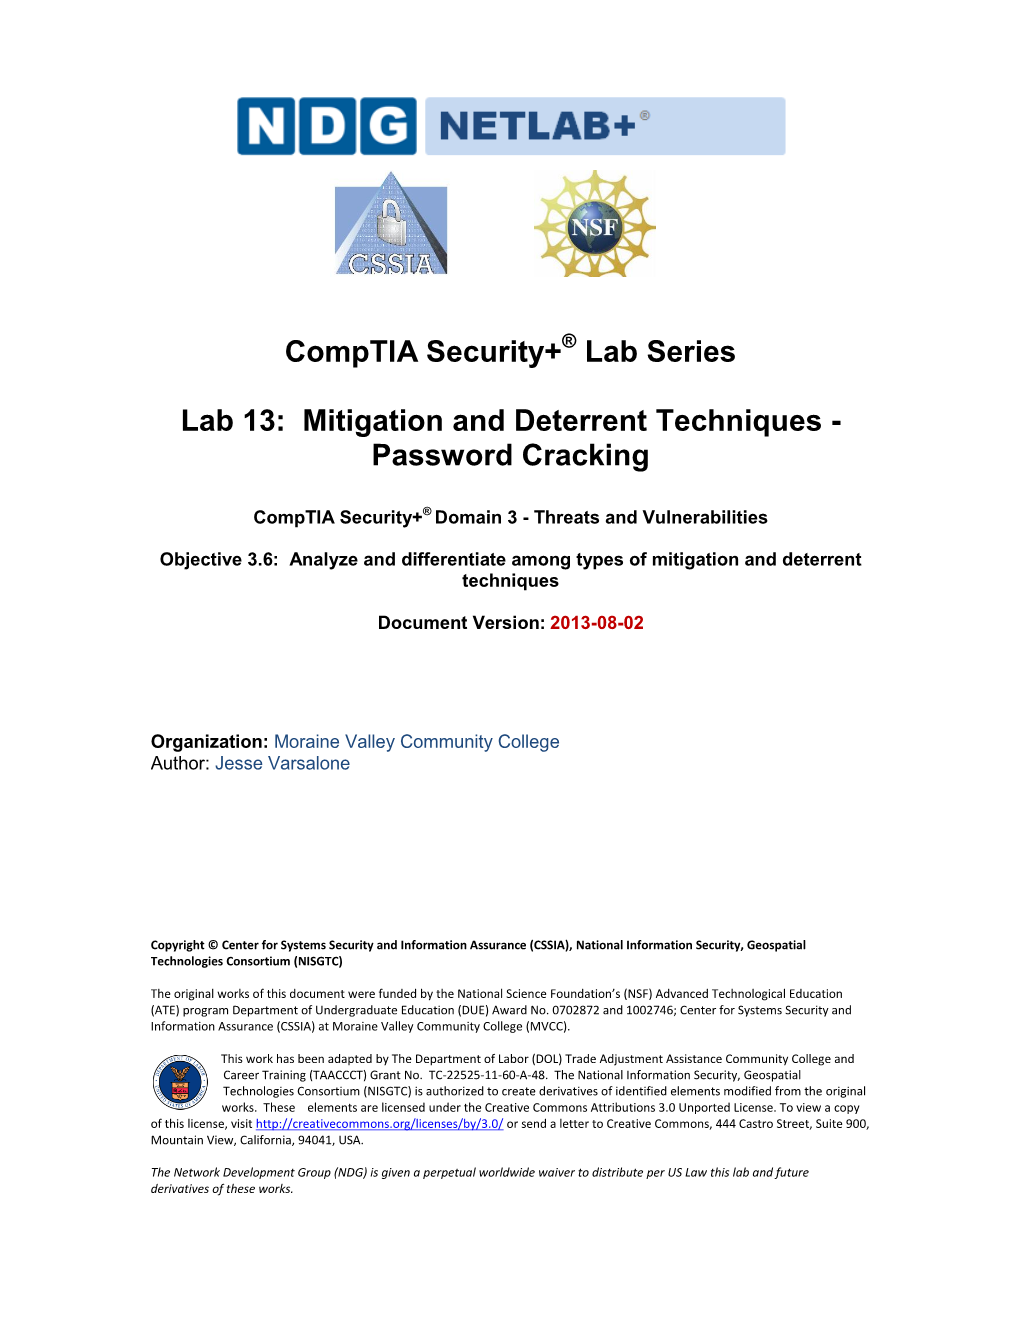 Lab 13: Mitigation and Deterrent Techniques - Password Cracking